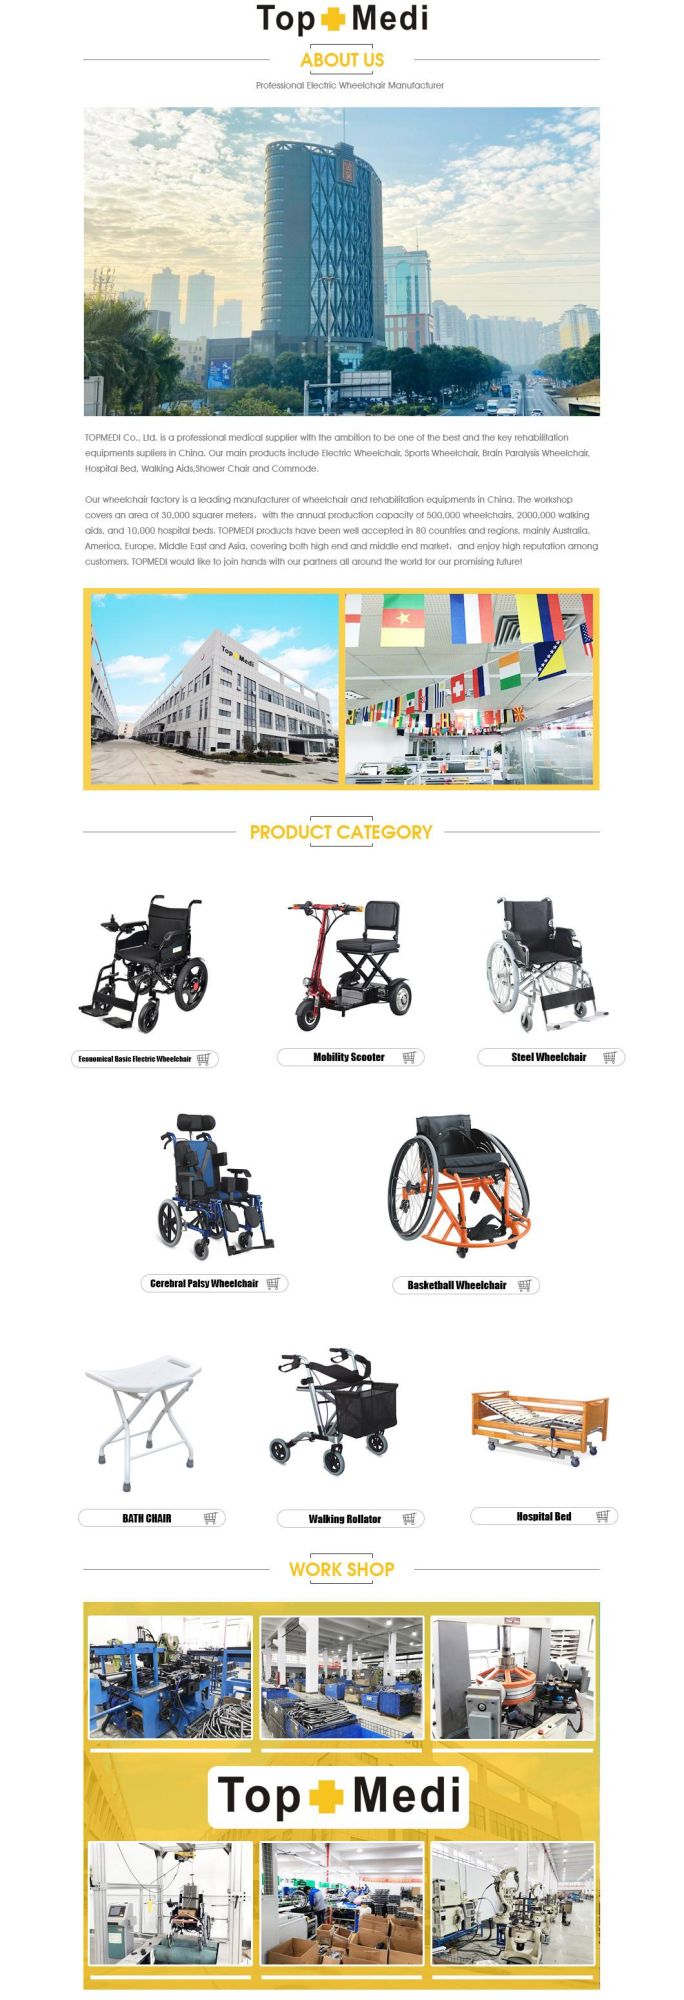 Topmedi Hot Sale Manual Steel Wheelchair with Quick Release Rear Wheel